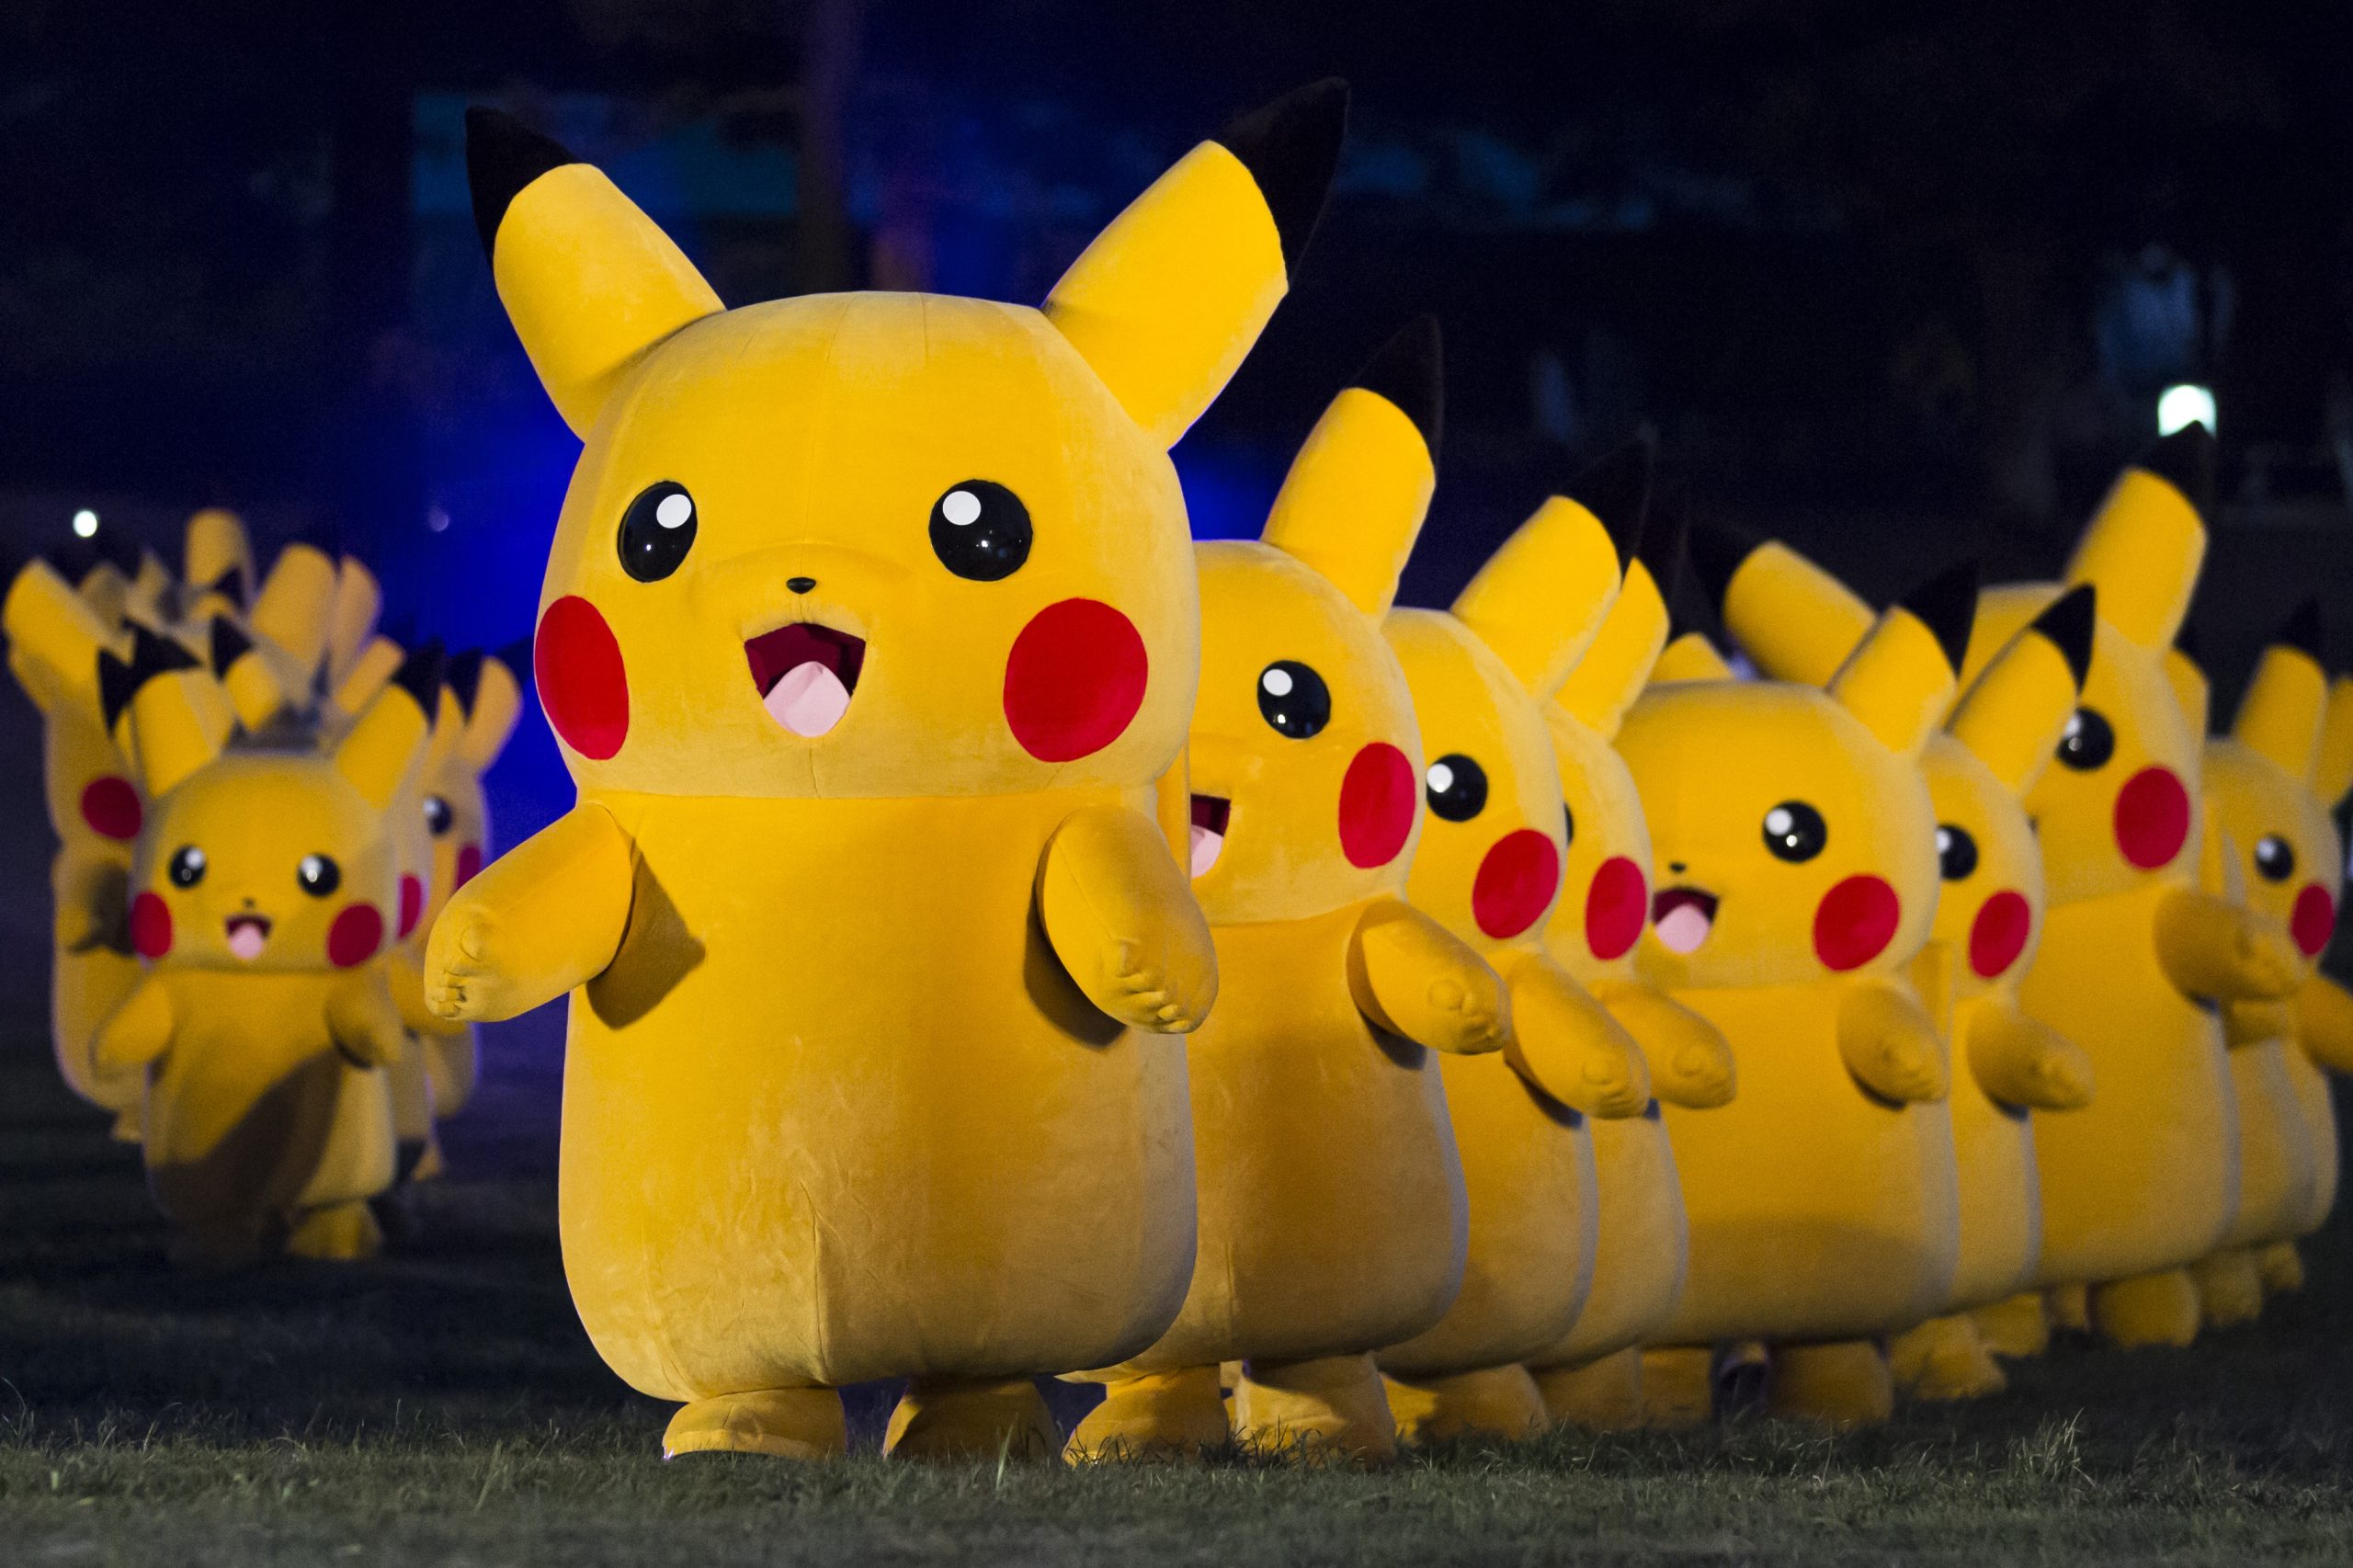  ¡Pokémon tendrá su propio parque temático Universal Studios!